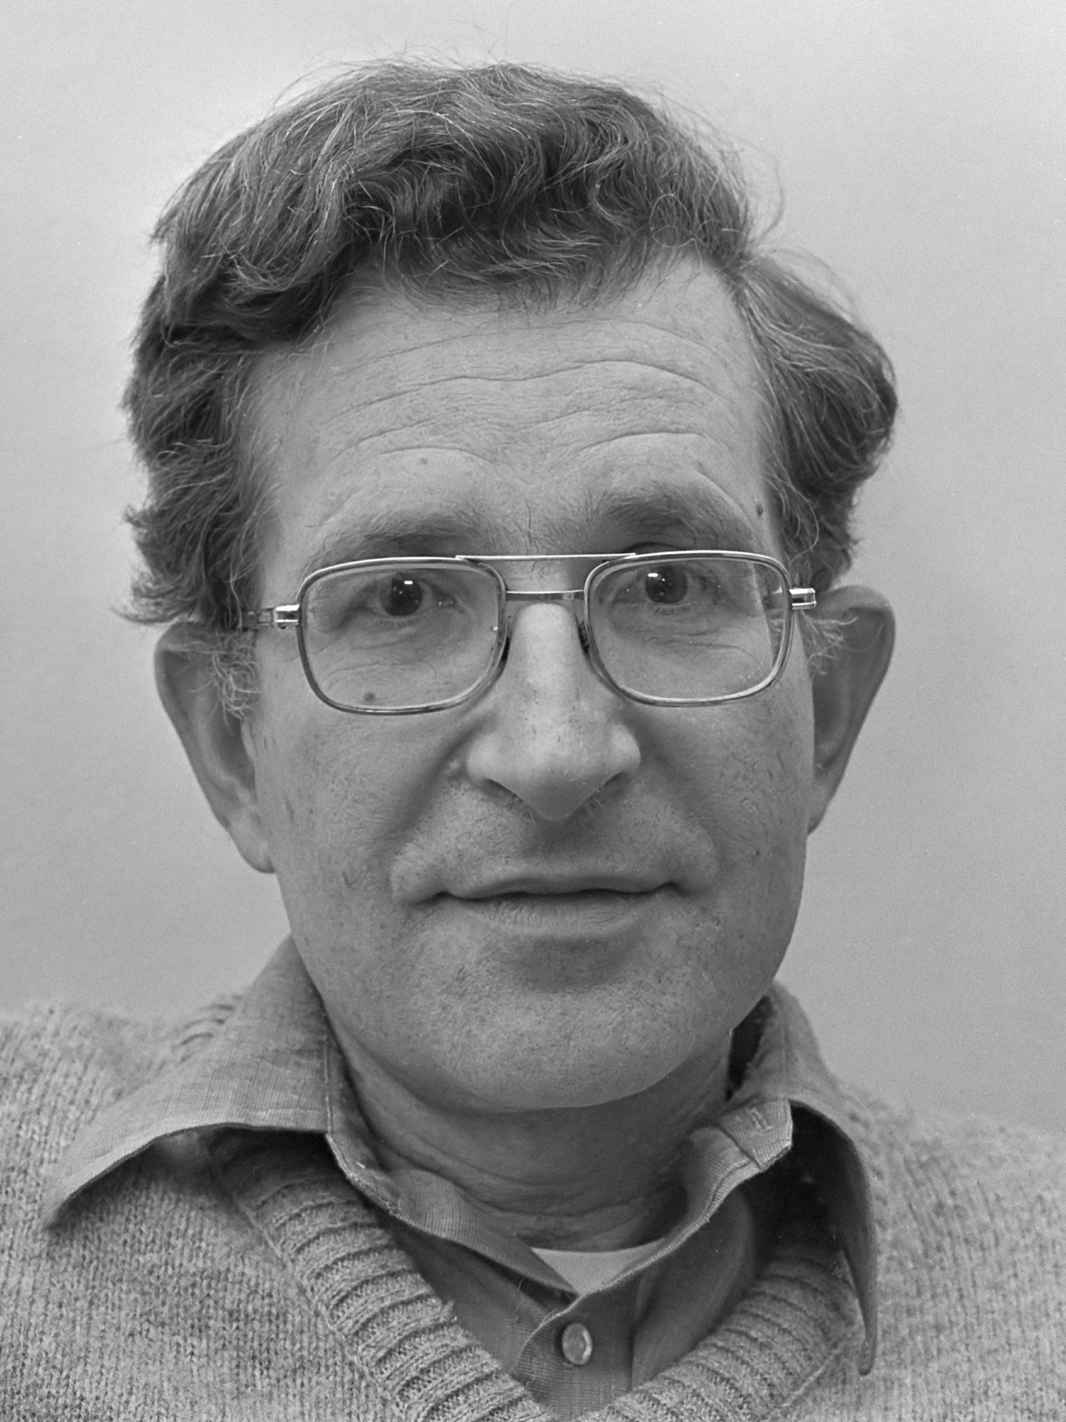 Noam_Chomsky_jackofclubs